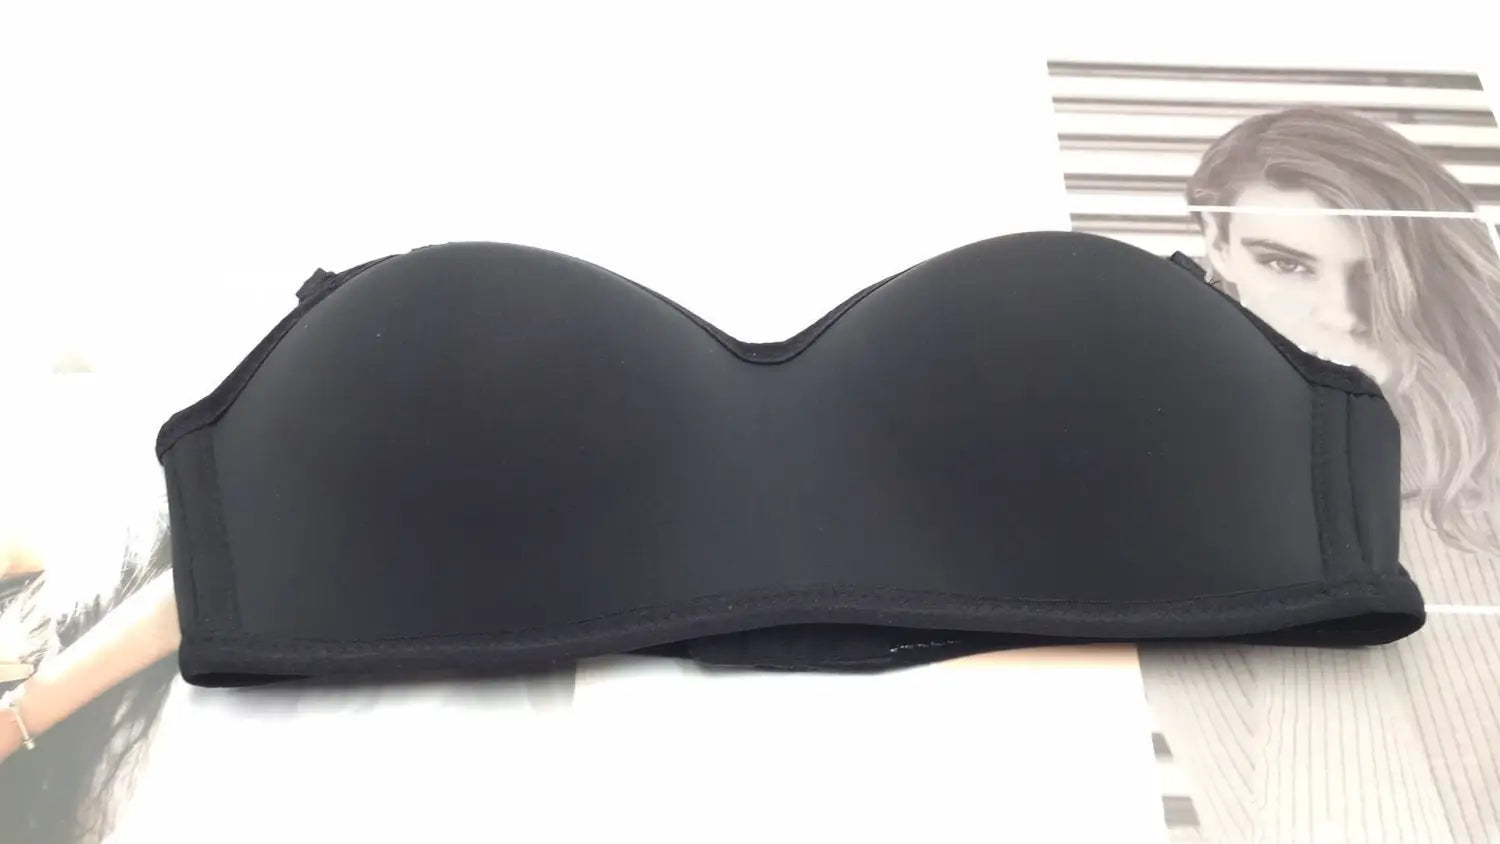 Lovemi - Gathered non-slip lingerie bra